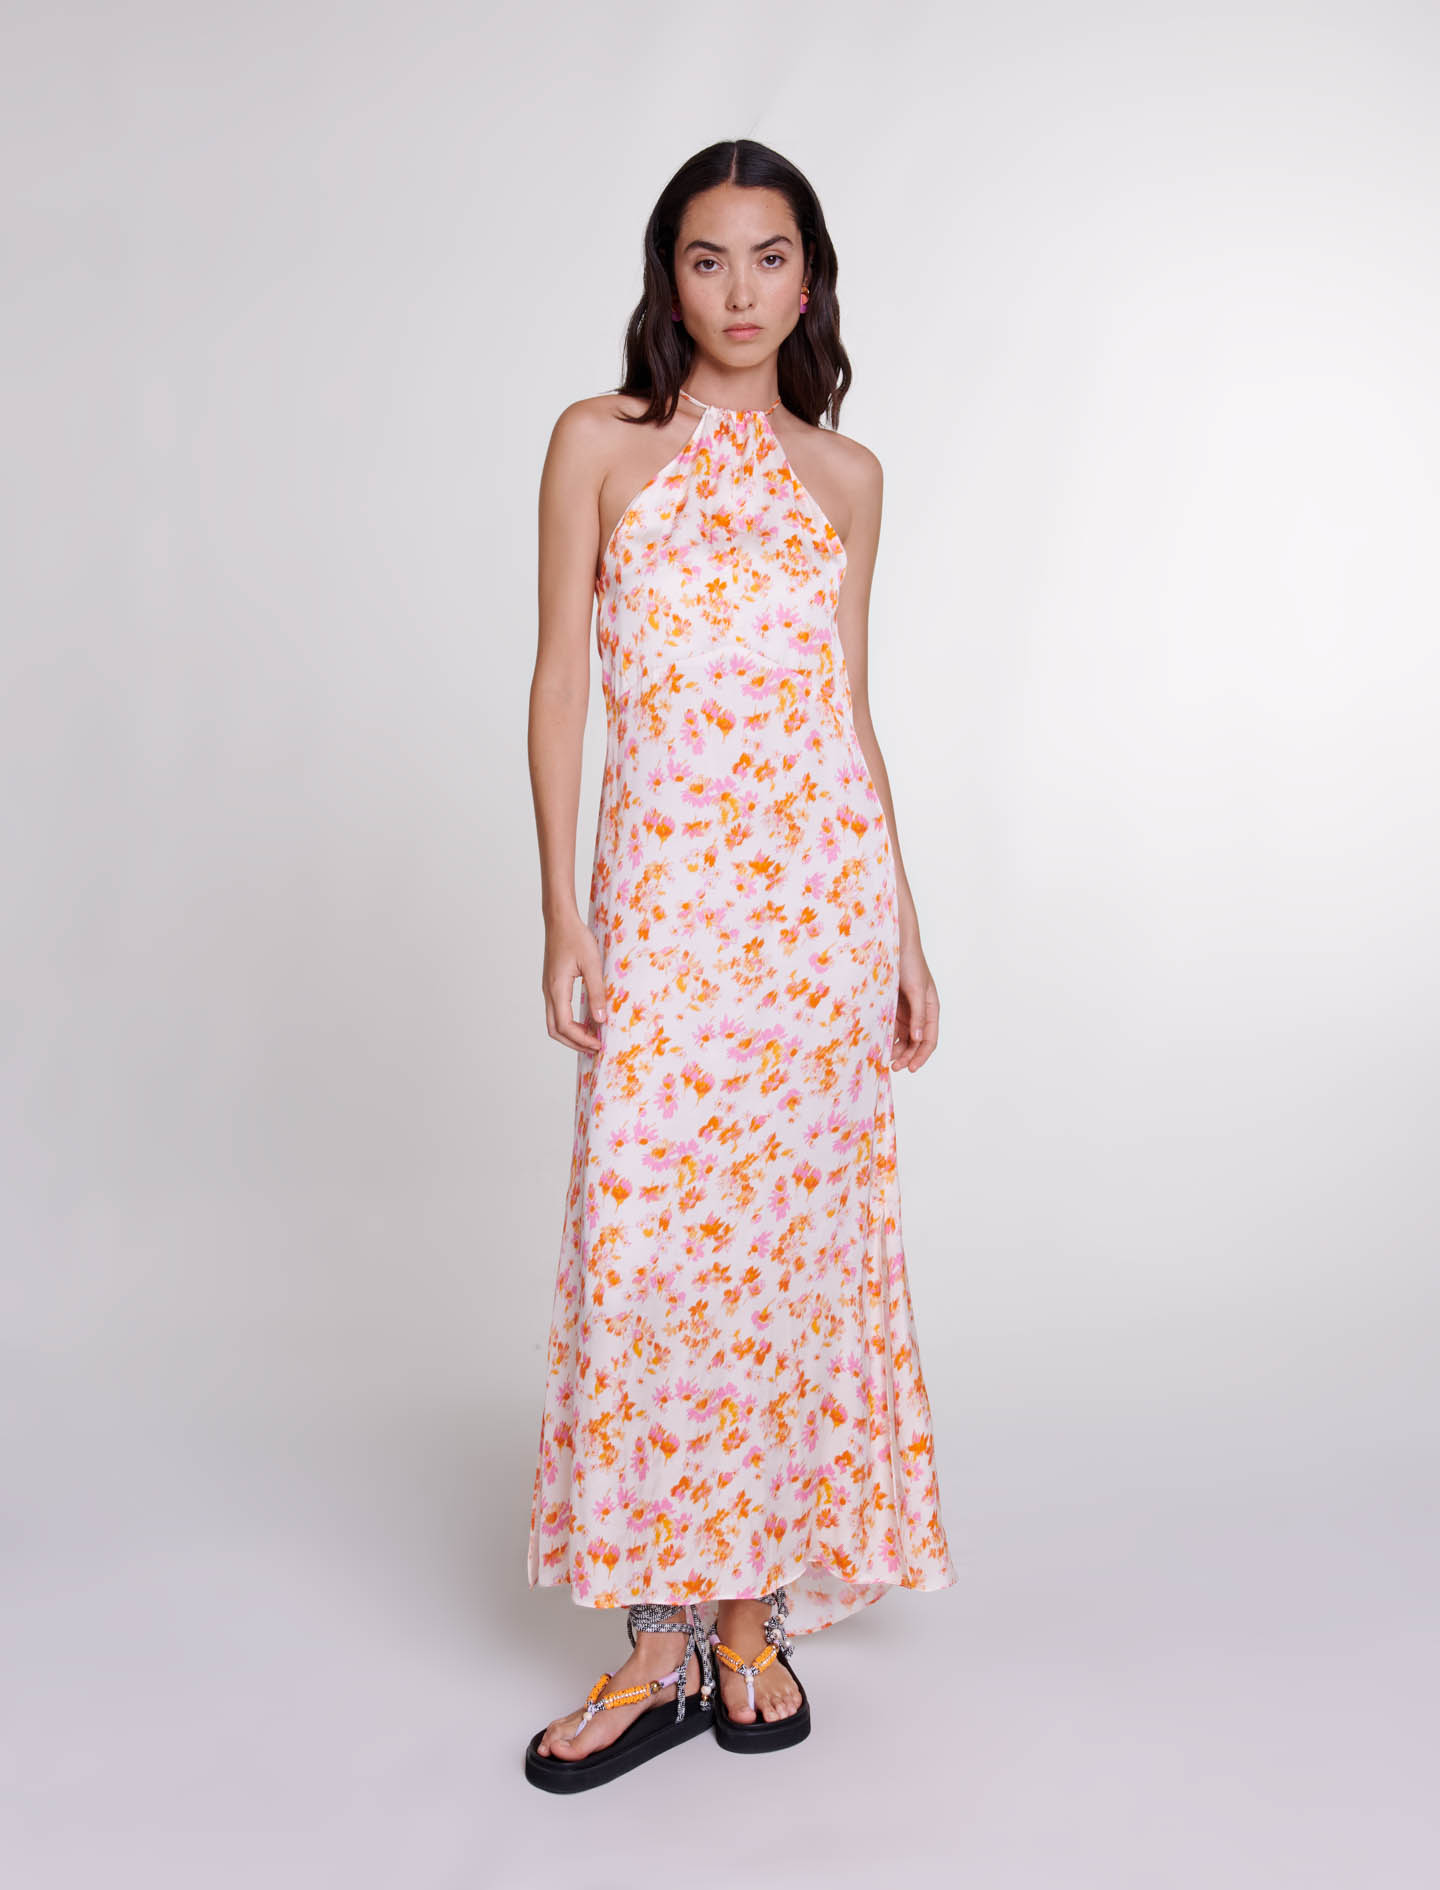 Maje Woman's viscose Lining: Floral satin-effect maxi dress for Spring/Summer, in color Orange Flower Print /